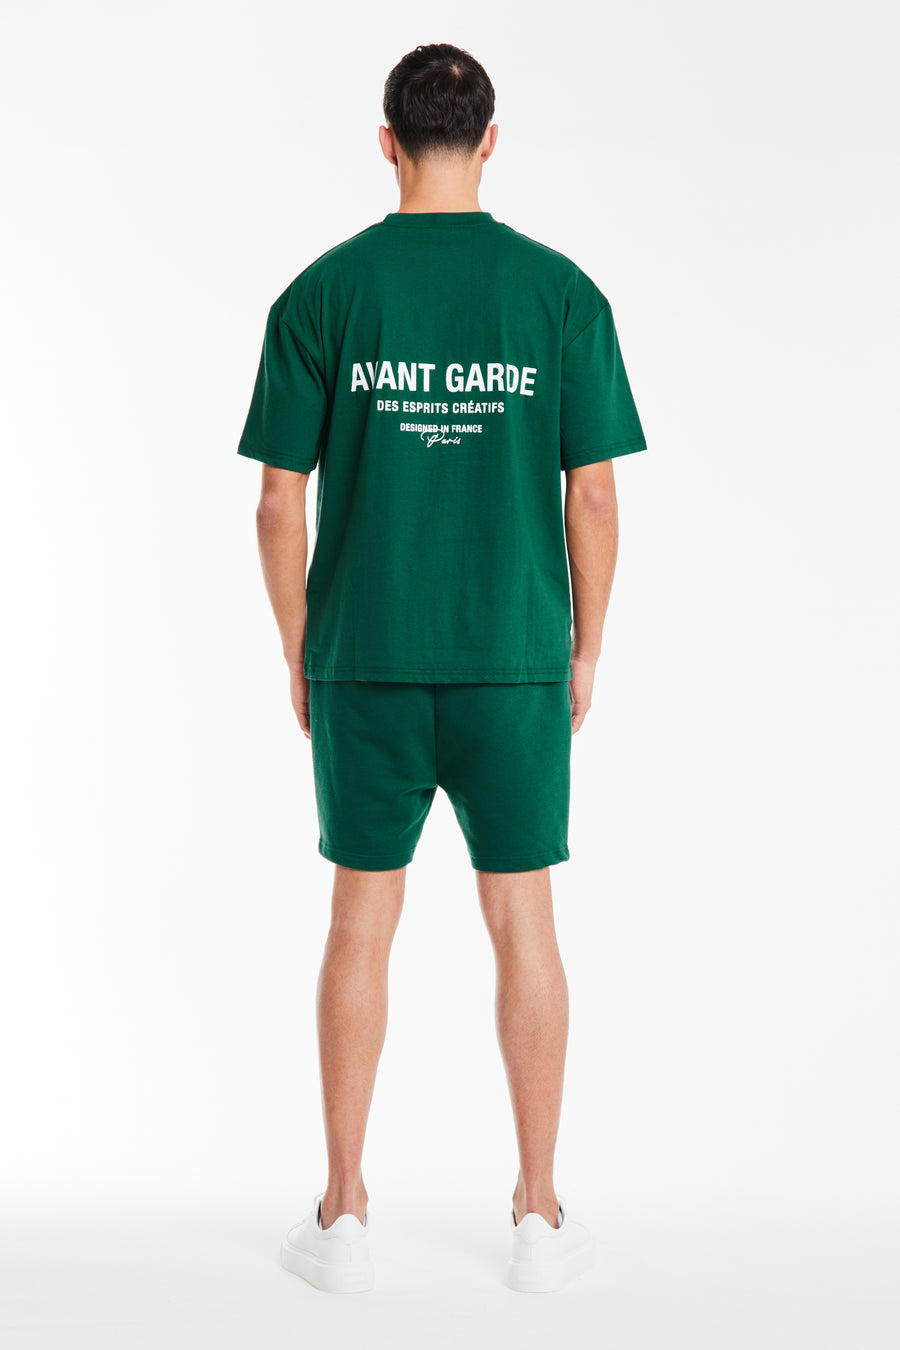 dark green jersey shorts in sale